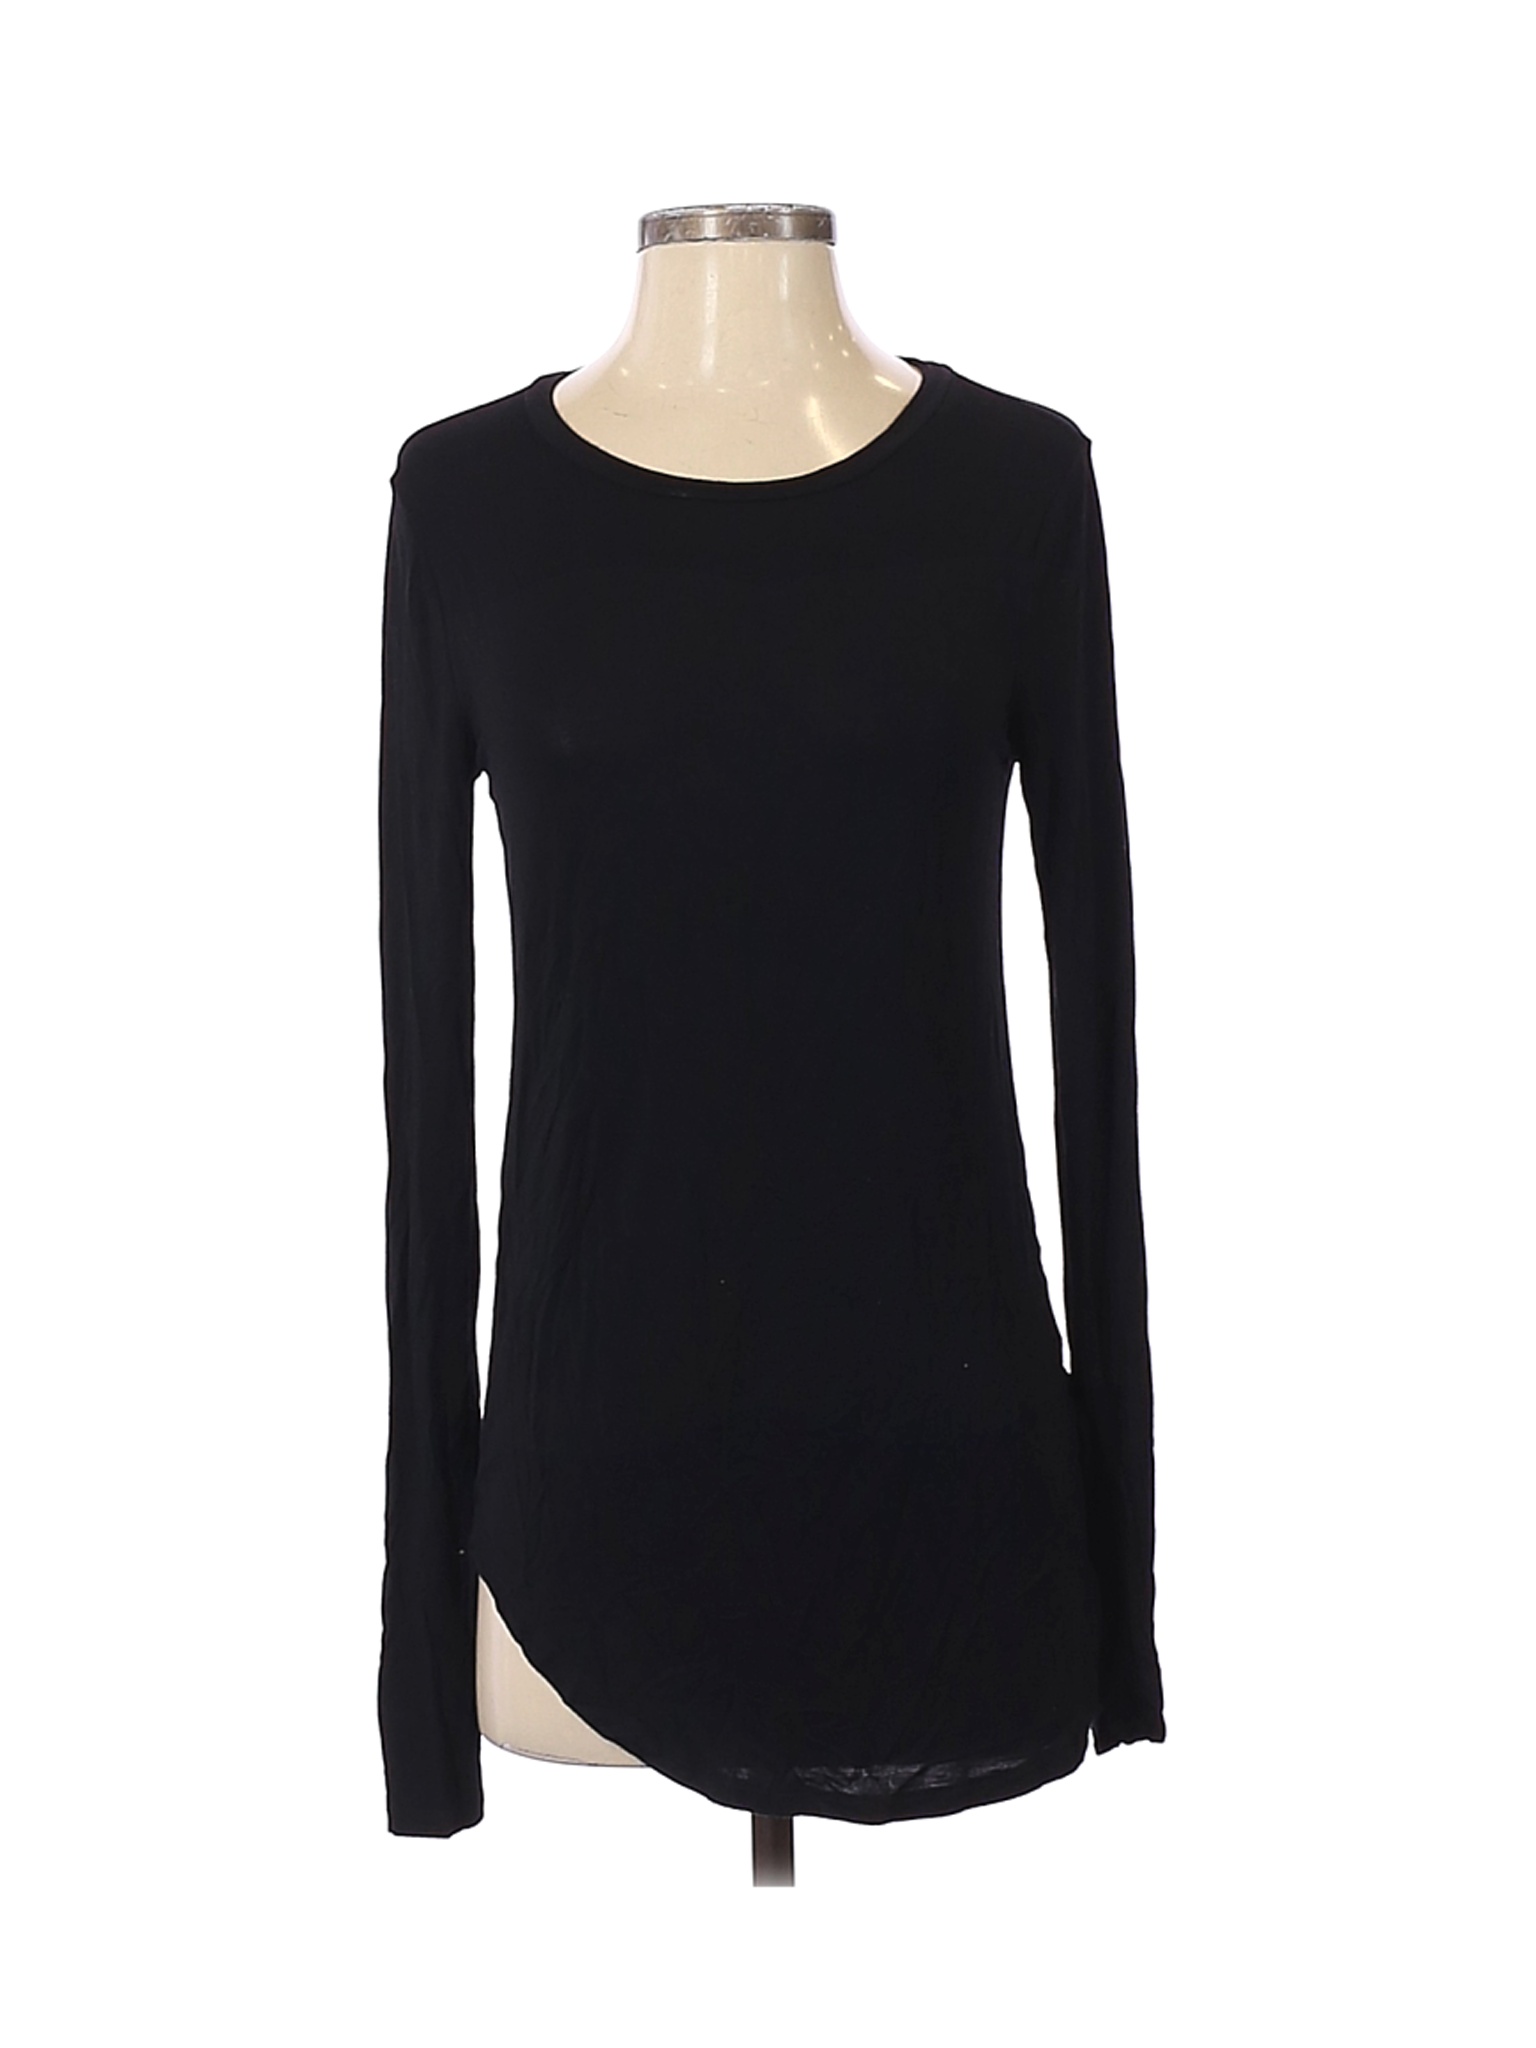 Old Navy Women Black Long Sleeve T-Shirt S | eBay